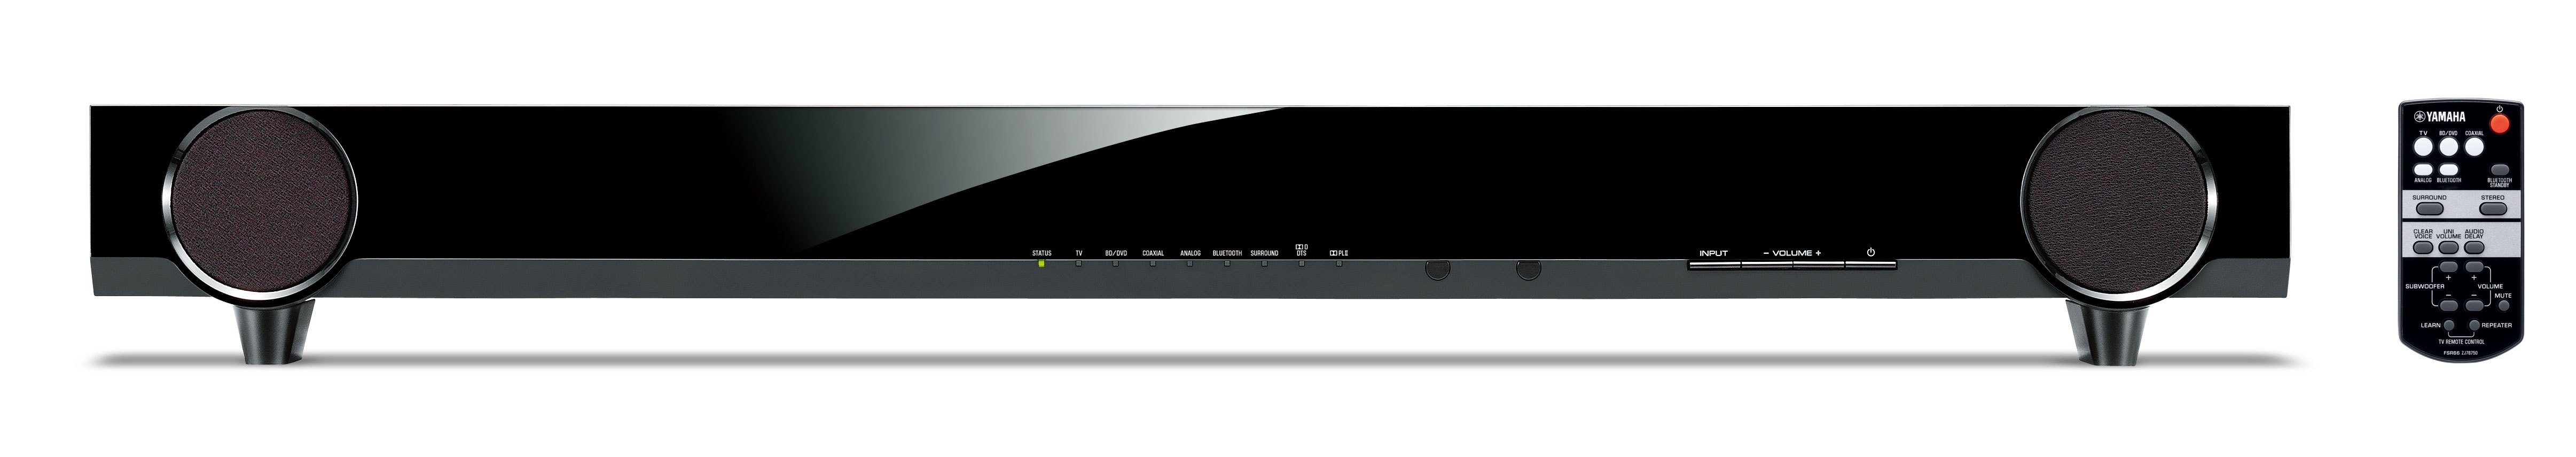 YAS-103 - Overview - Sound Bar - Audio & Visual - Products - Yamaha